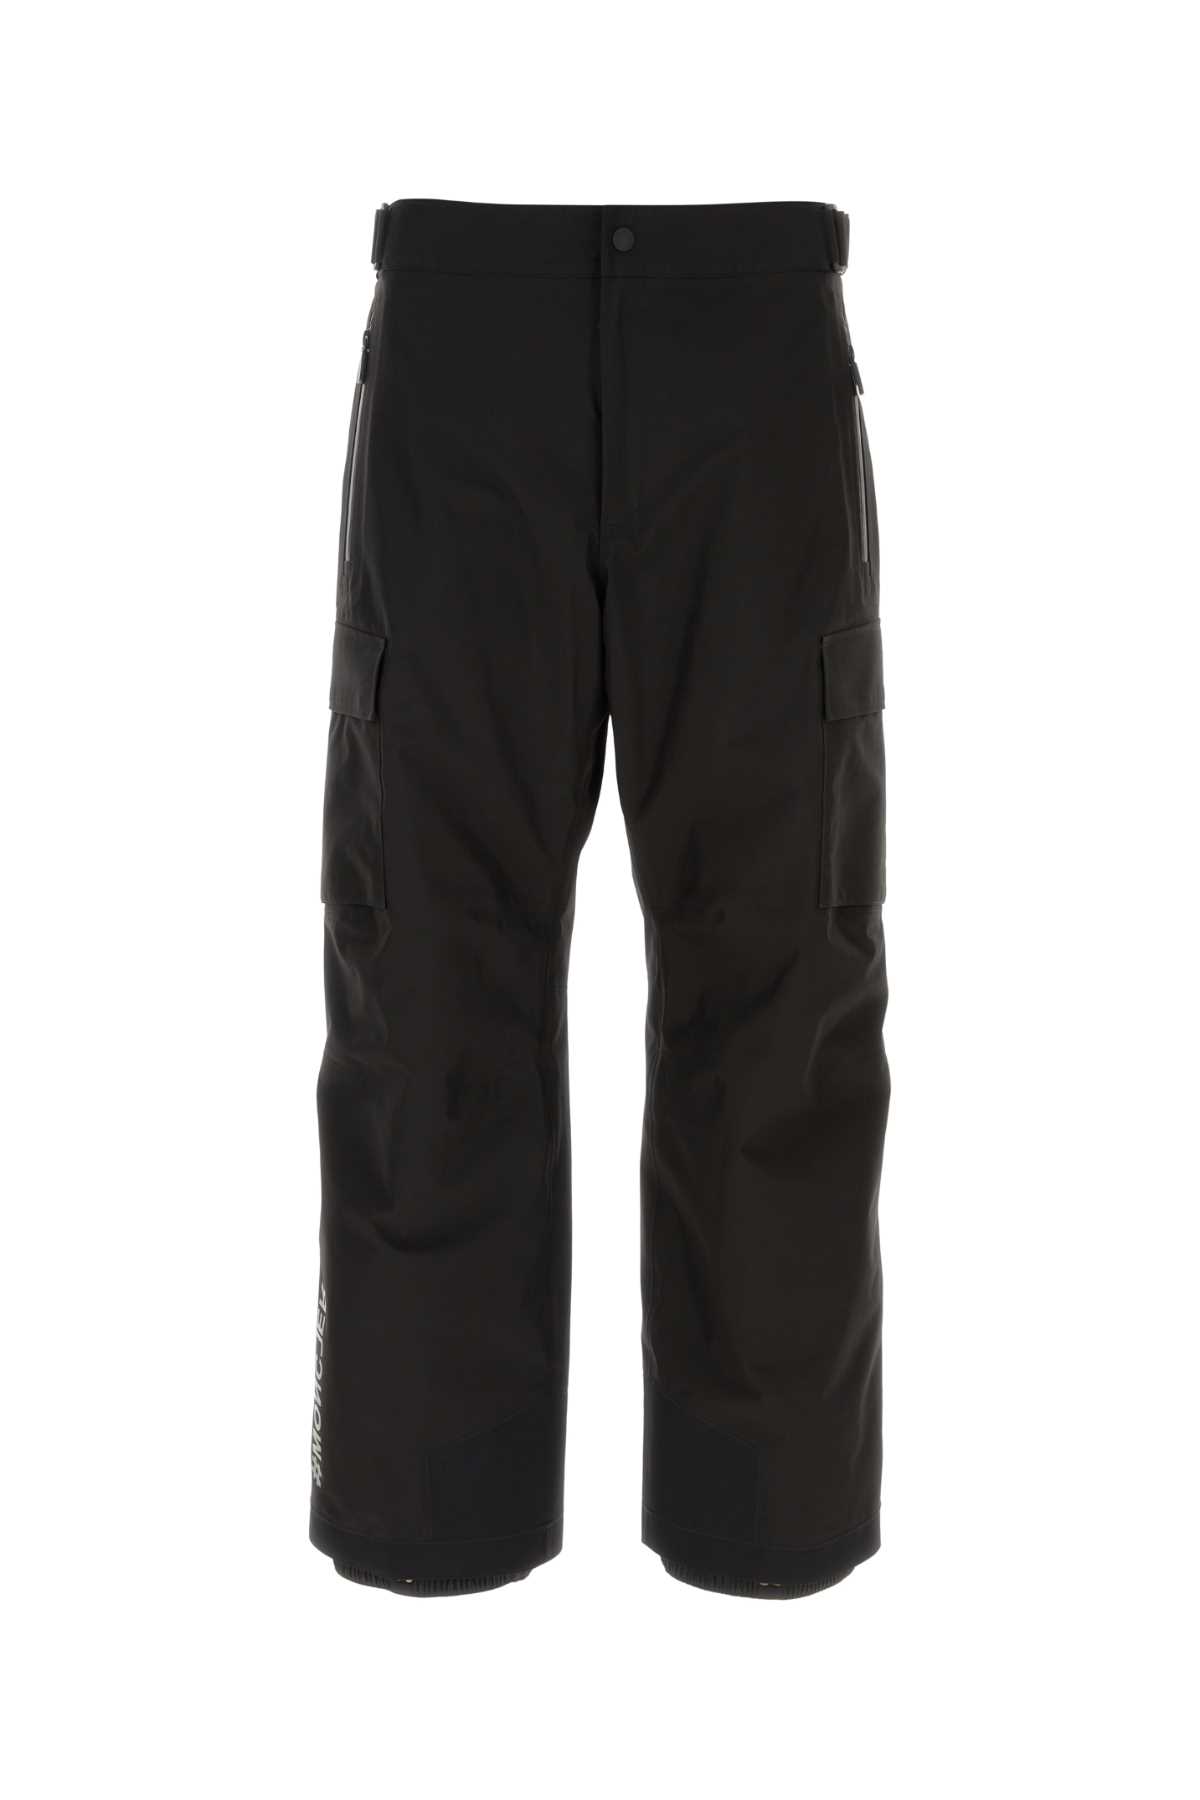 Black Polyester Ski Pant